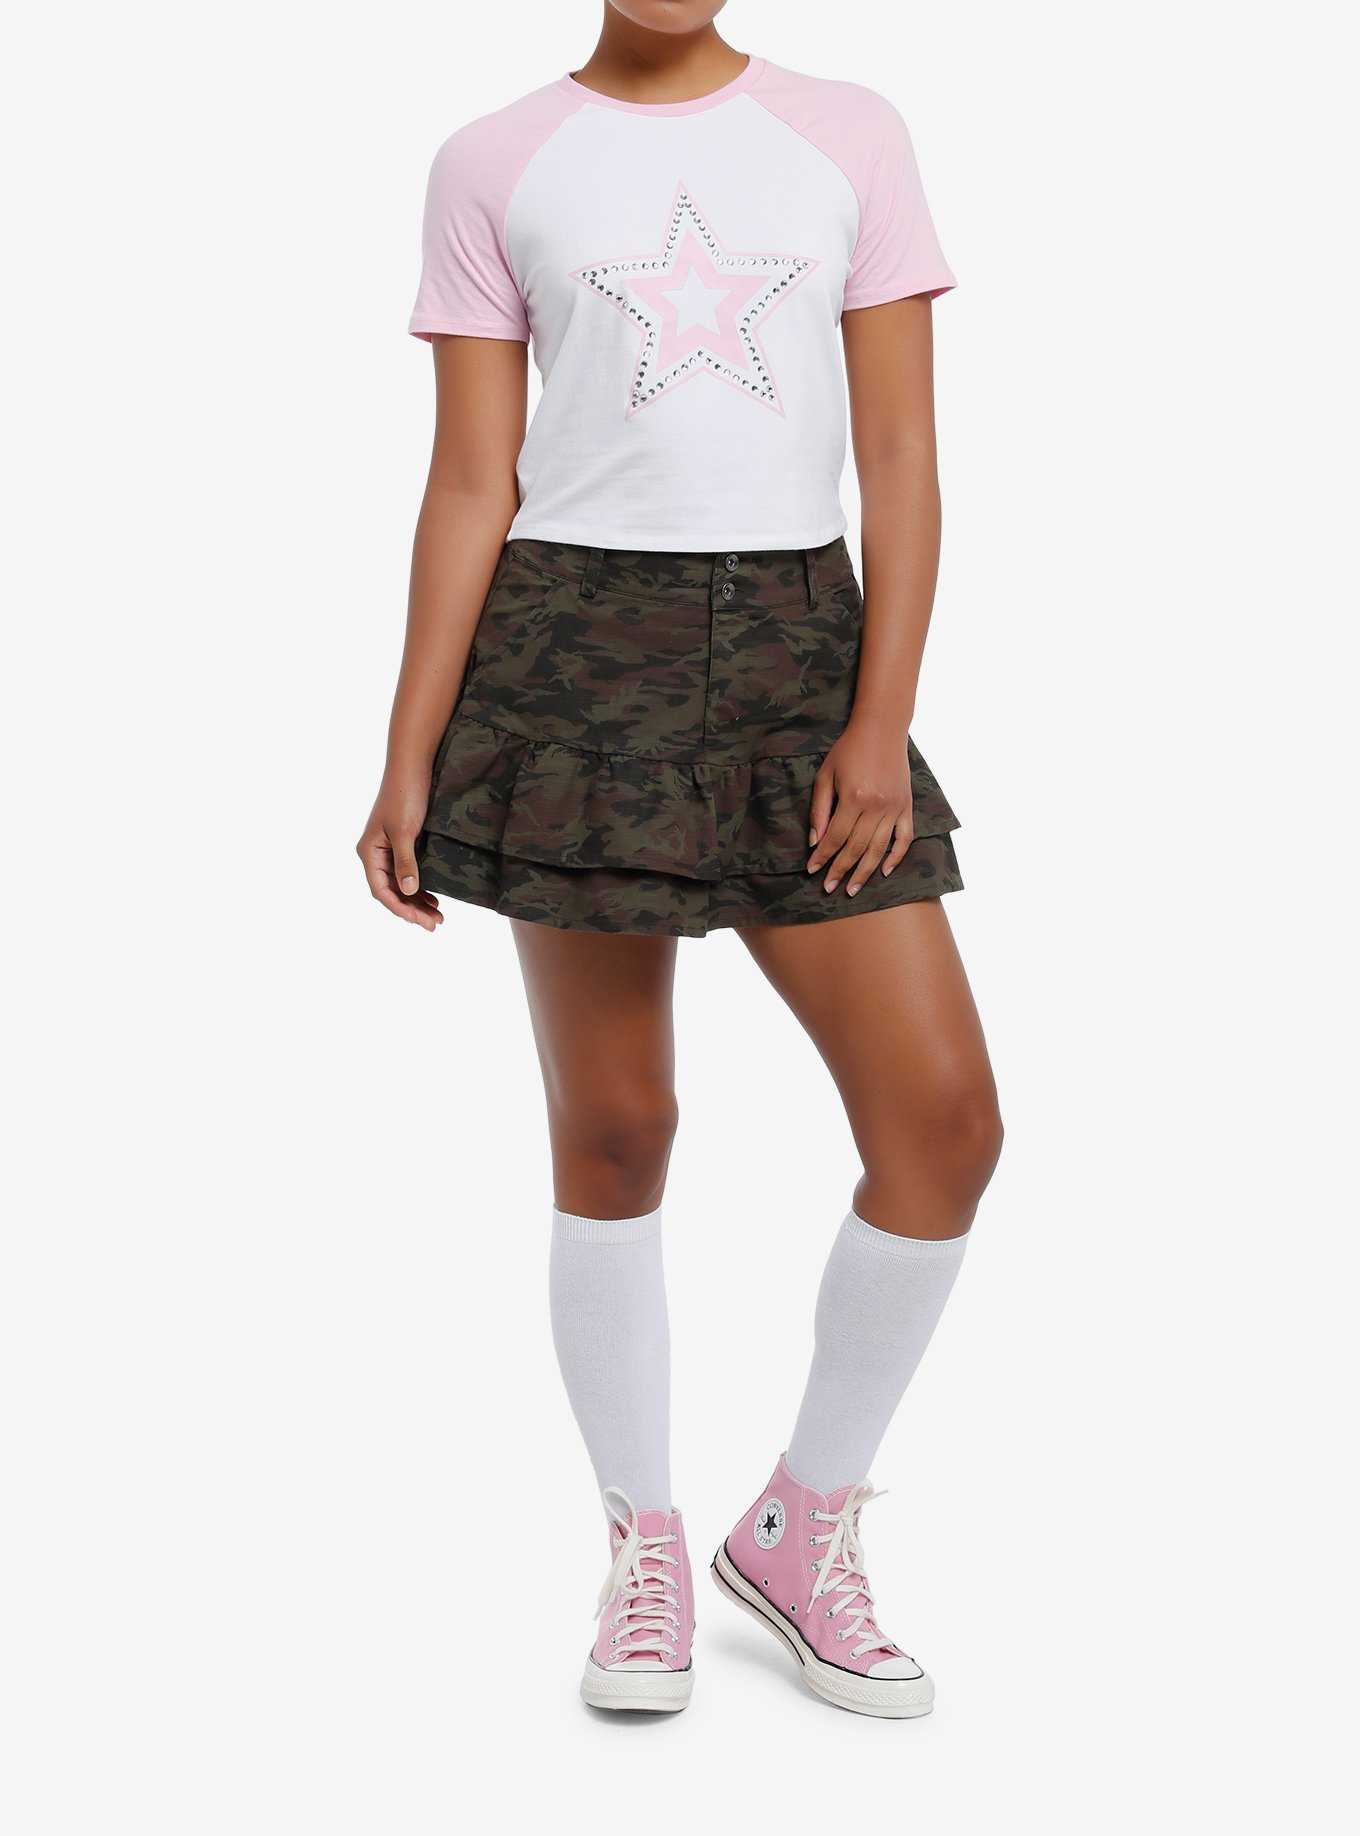 Sweet Society Rhinestone Star Girls Crop Baby Raglan T-Shirt, , hi-res